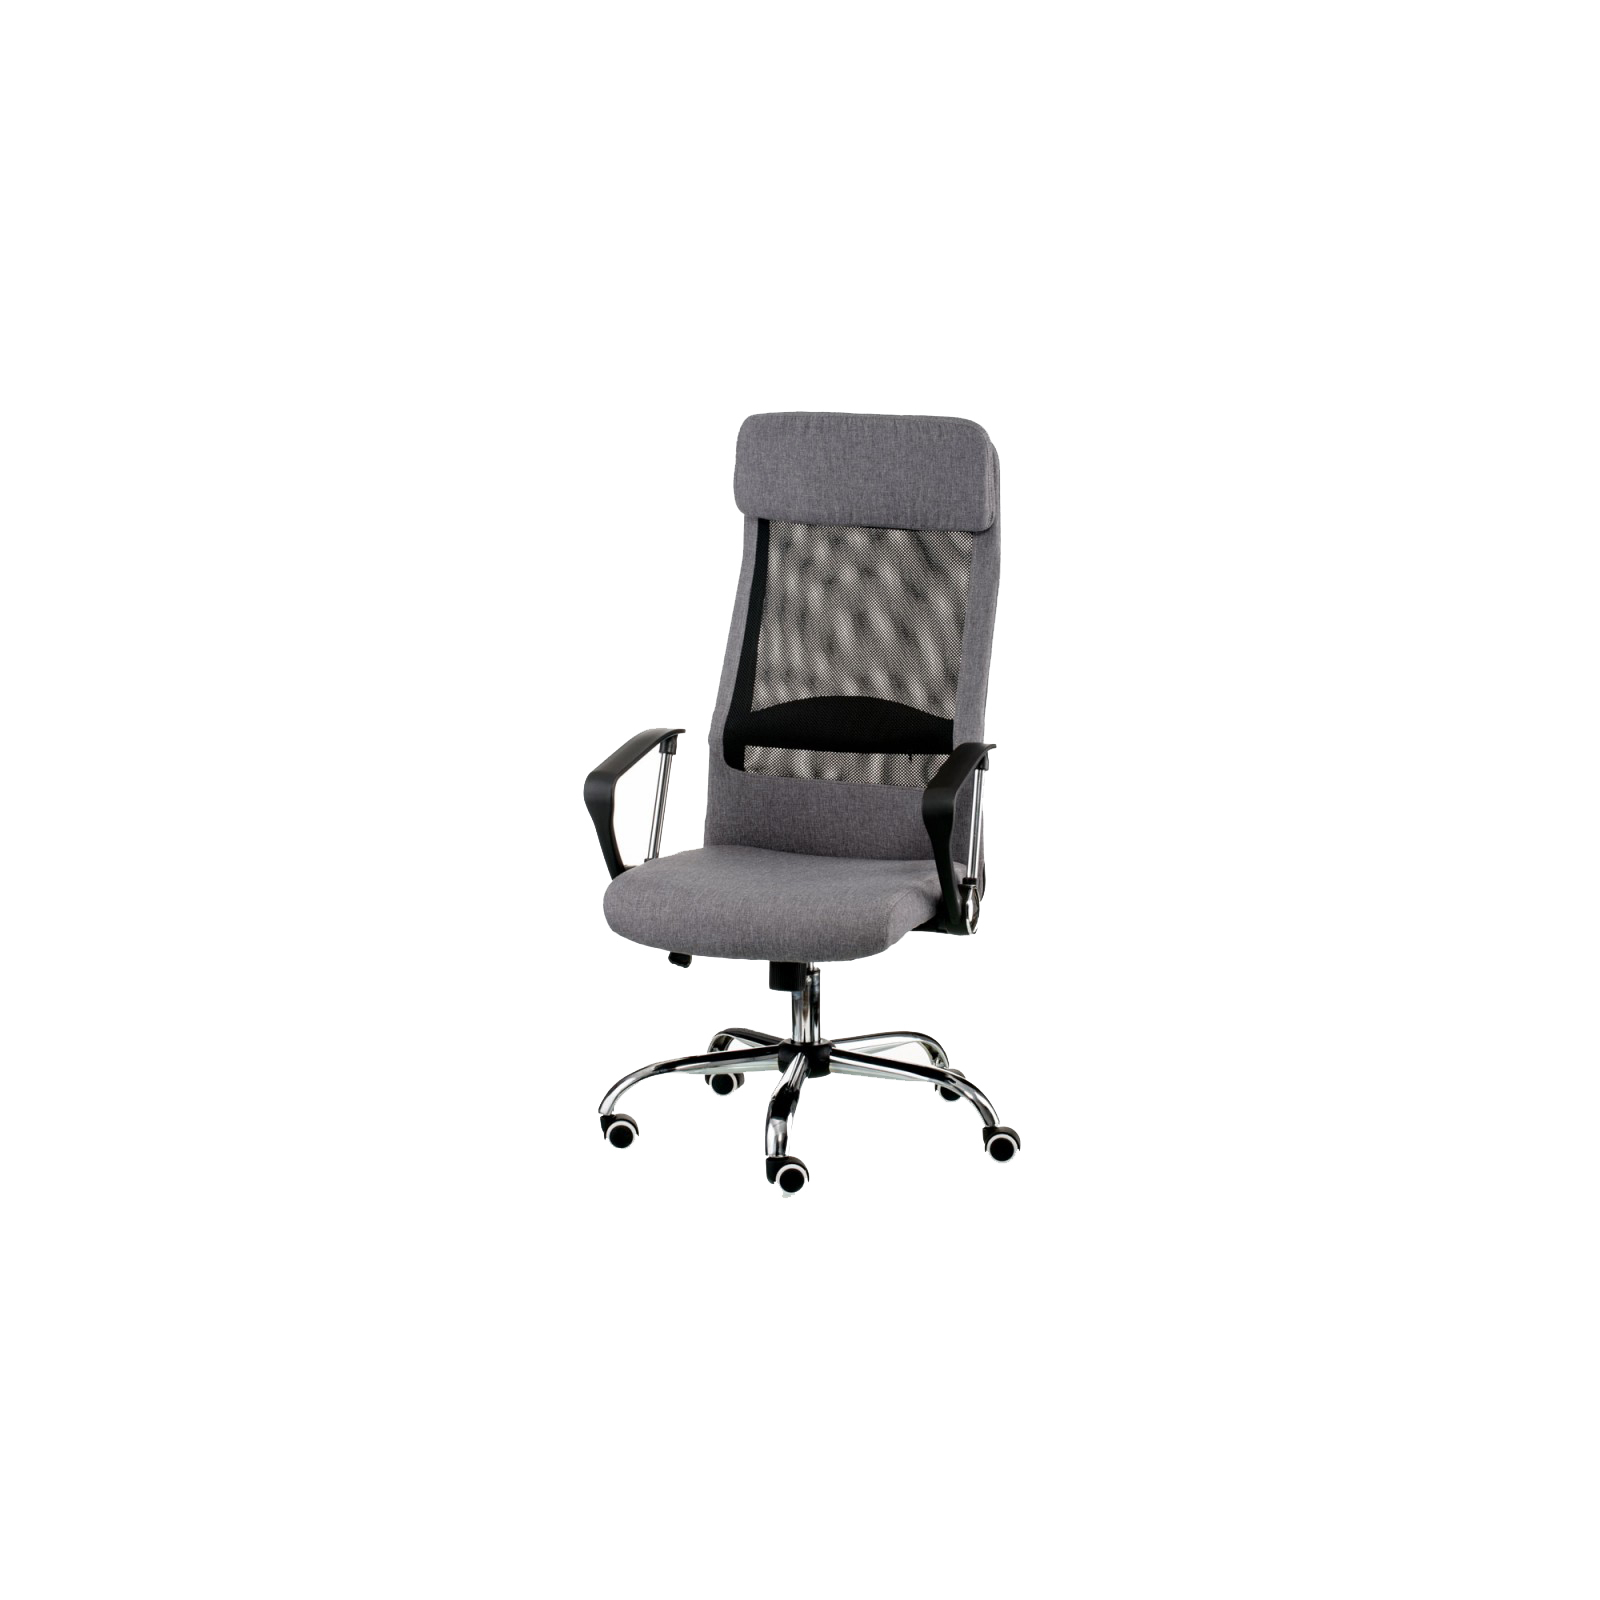 Офисное кресло Special4You Silba grey (000003631)